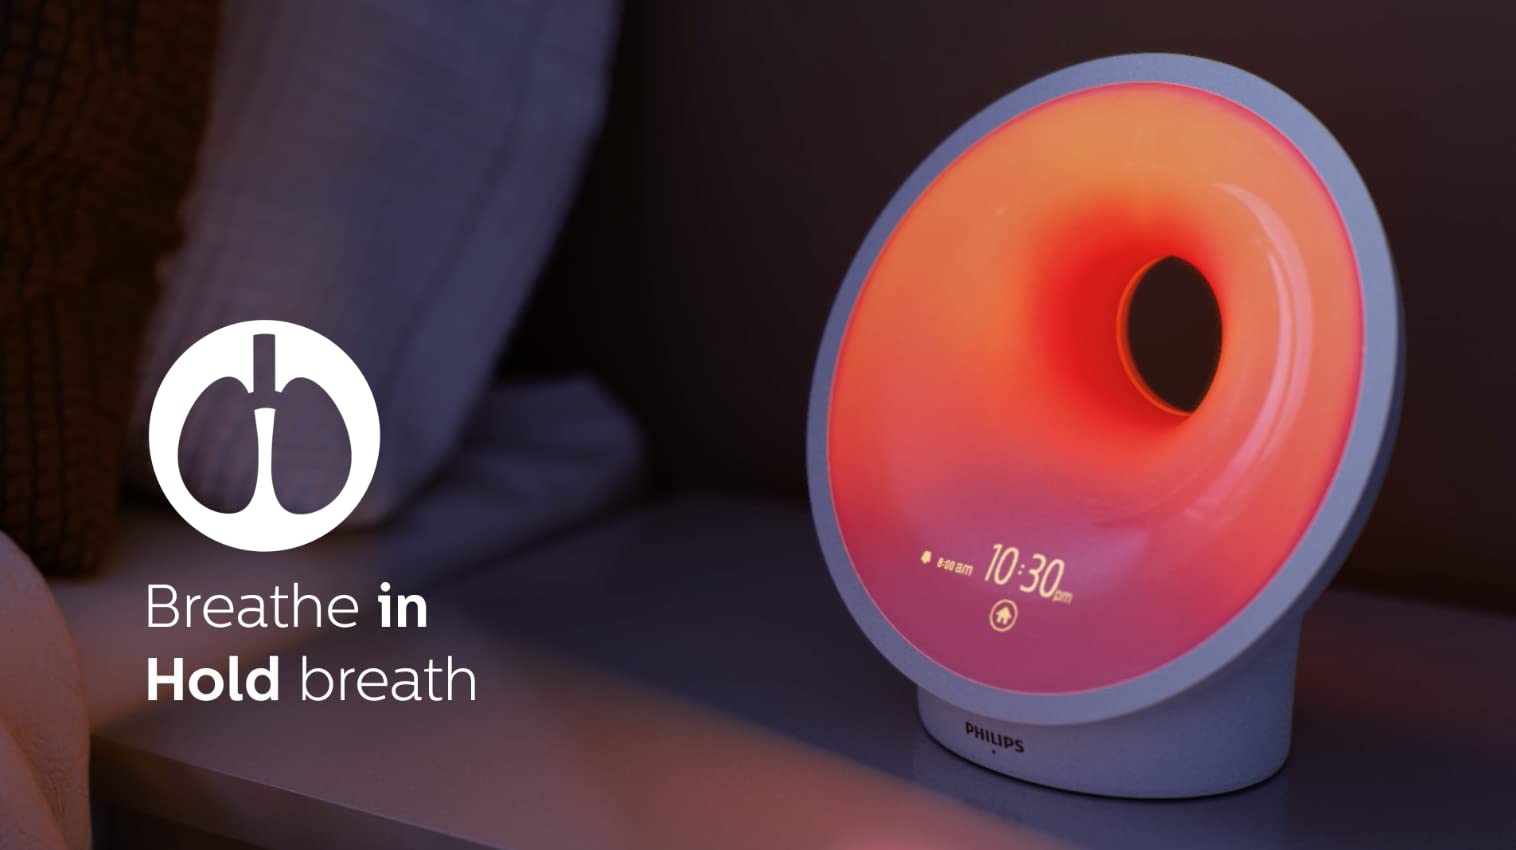 Philips SmartSleep Connected Sleep and Wake-Up Light, Personalized Sunrise and Sunset, SleepMapper App Enabled, Sleep Environment Tracking, HF3670/60